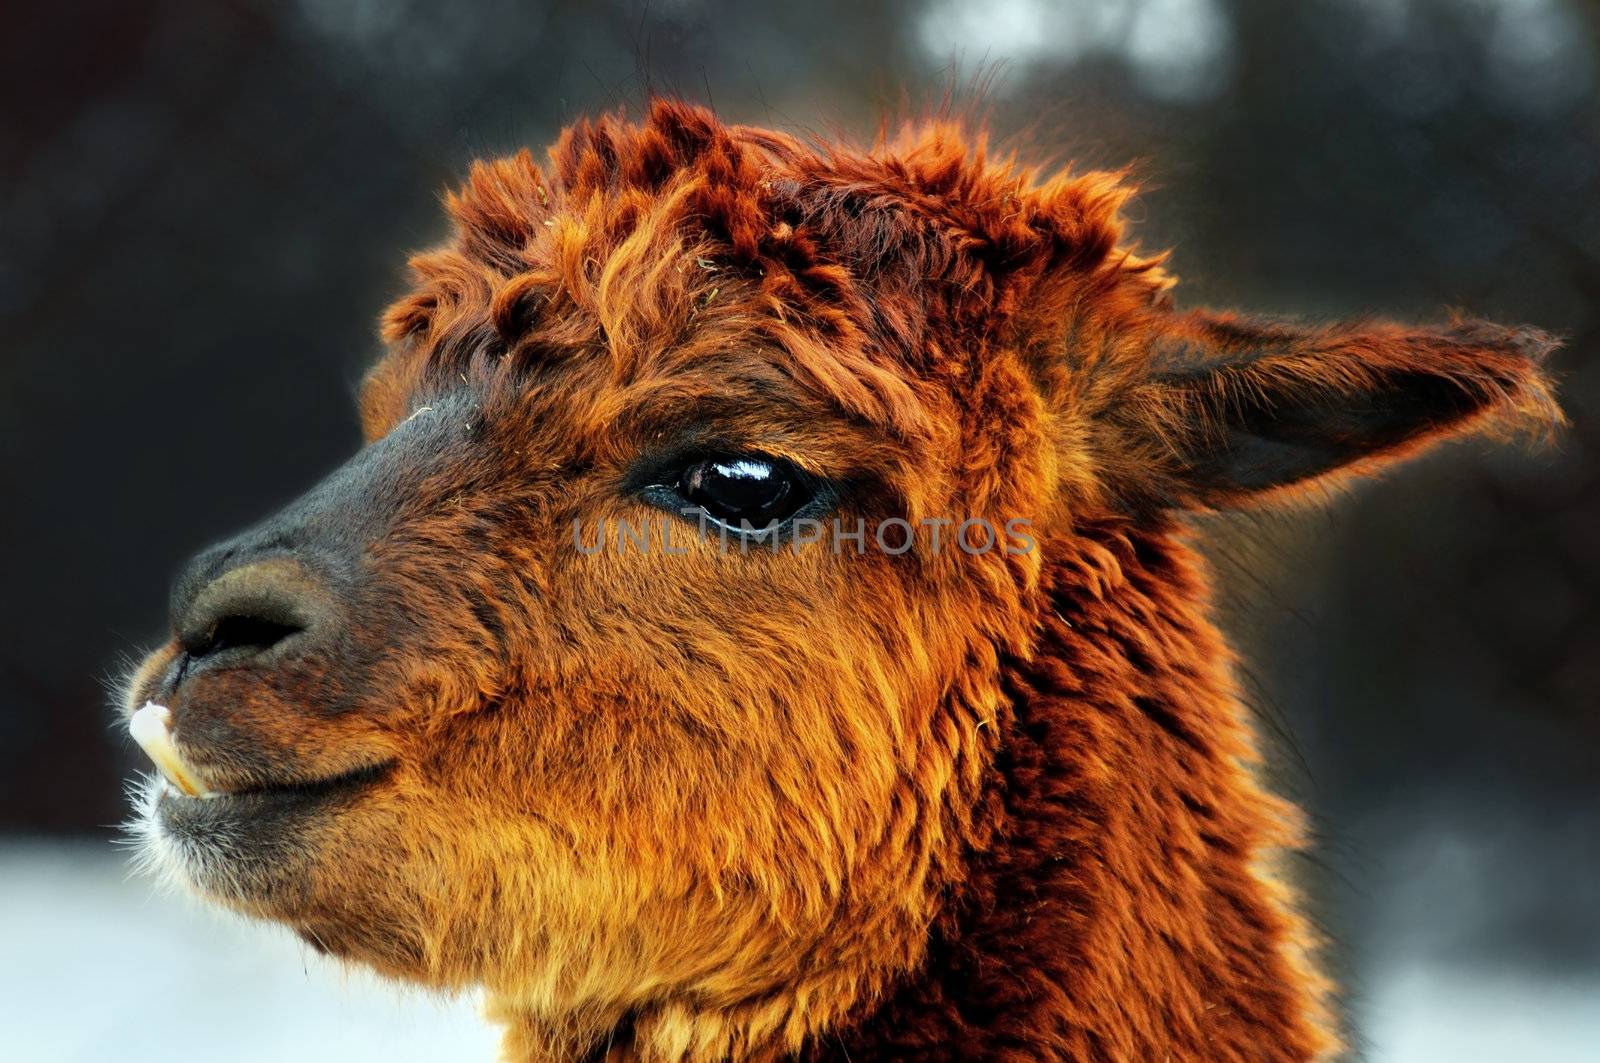 Funny face brown alpaca (lama) portrait, great details.